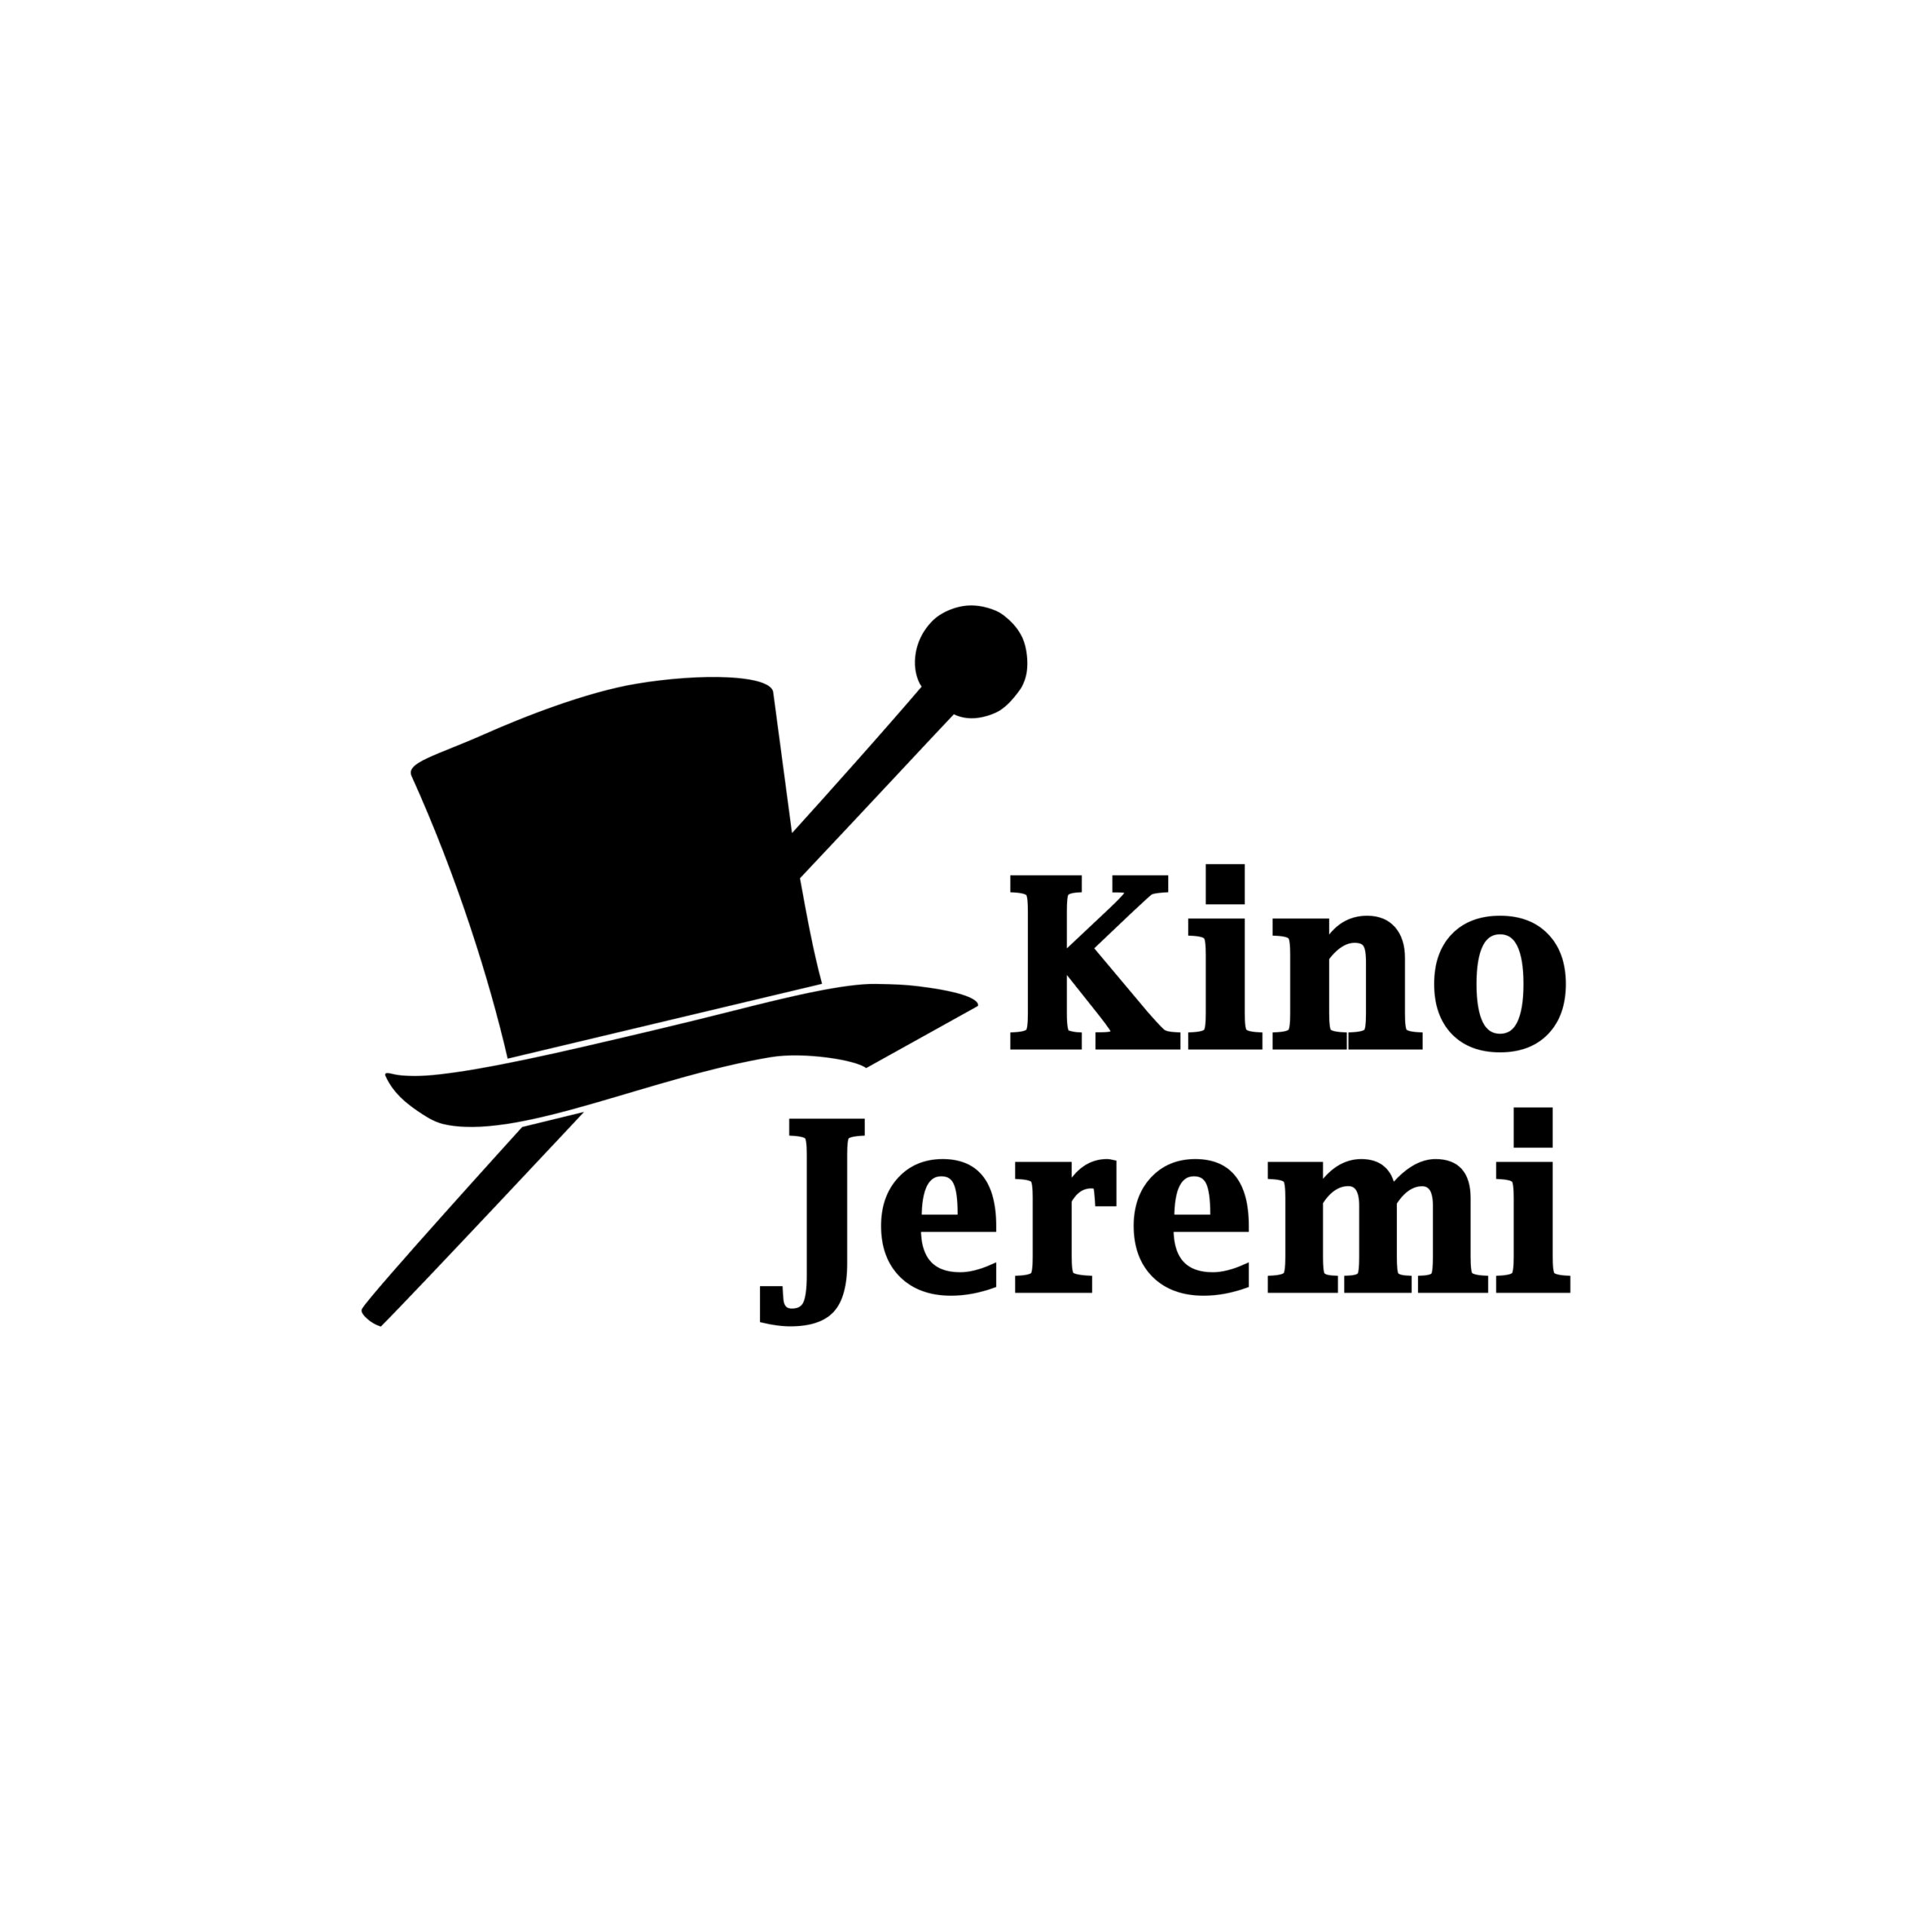 Kino Jeremi Logo